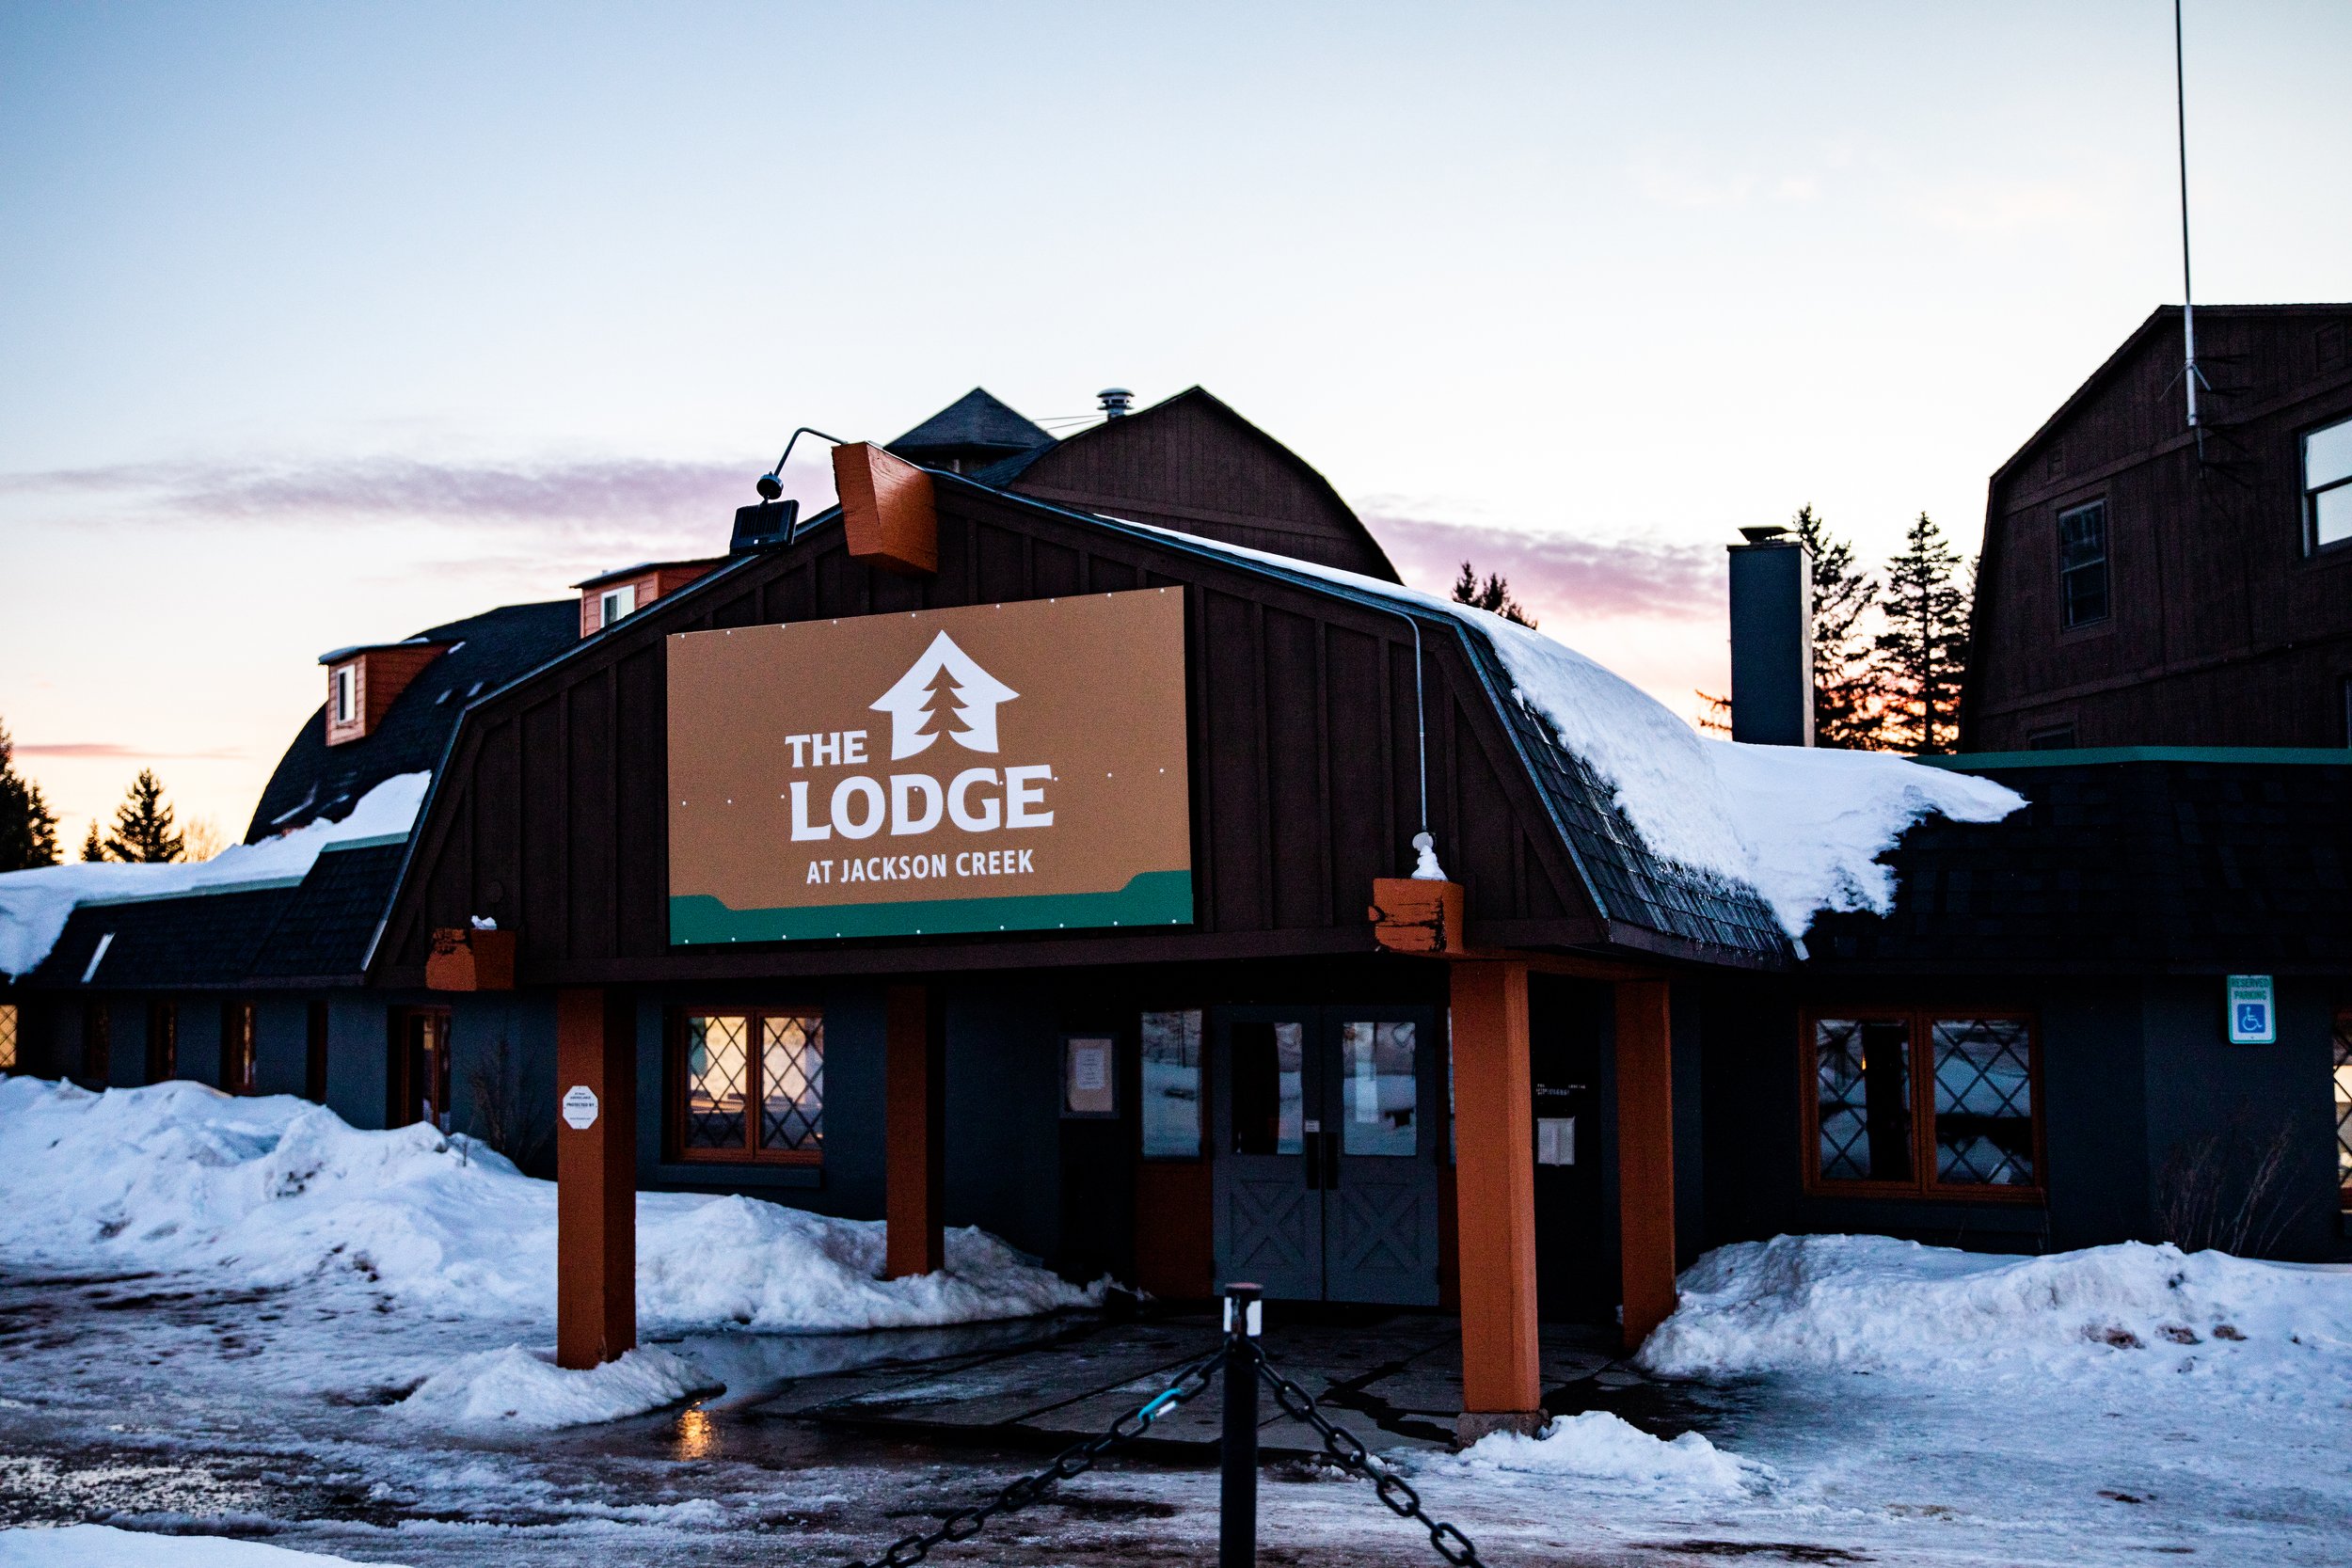 The Lodge at Jackson Creek